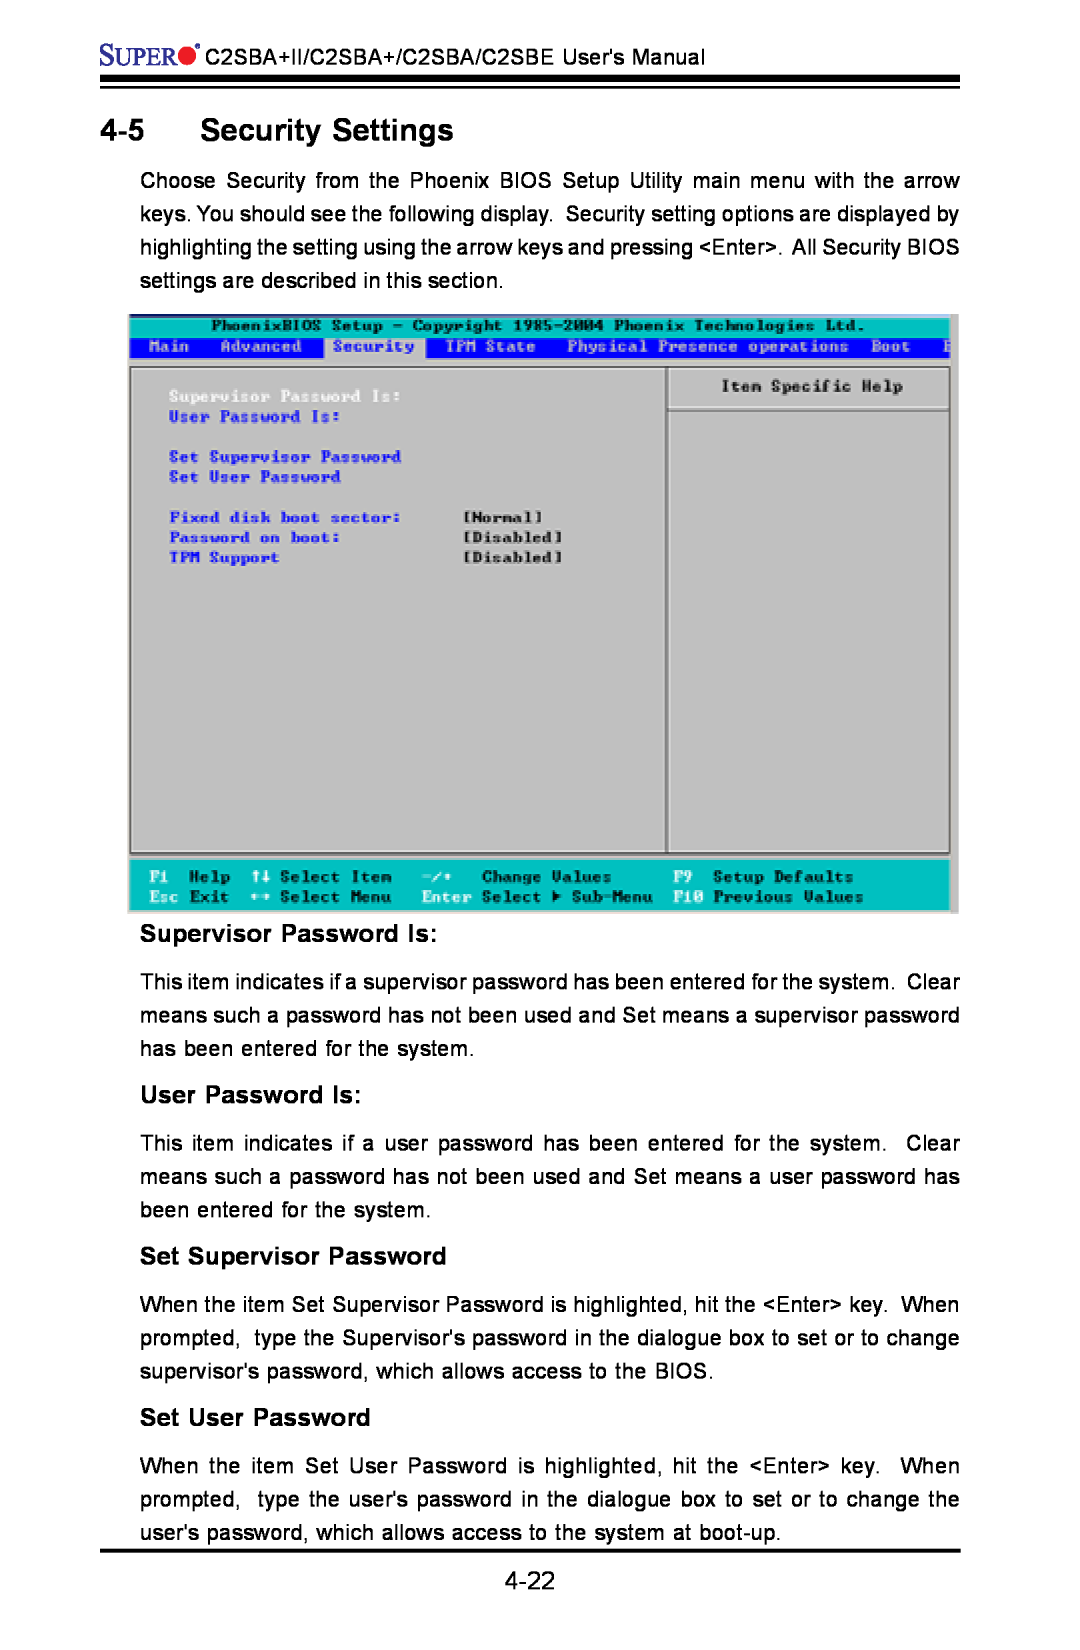 SUPER MICRO Computer C2SBA, C2SBE Security Settings, Supervisor Password Is, User Password Is, Set Supervisor Password 